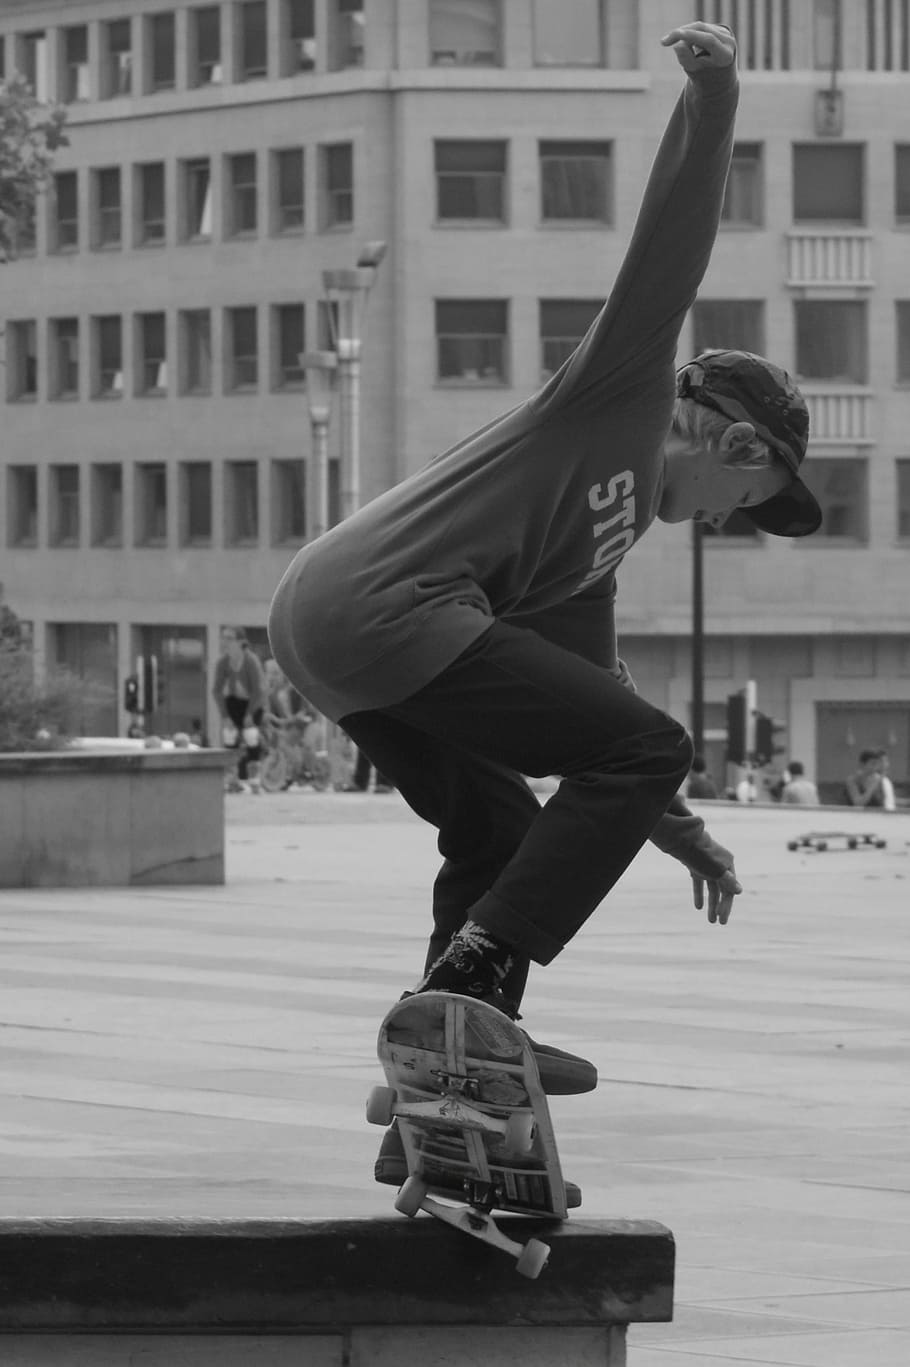 fotografi abu-abu, anak laki-laki, skate, naik, skating, olahraga, orang-orang, skateboard, manusia, kesayangan